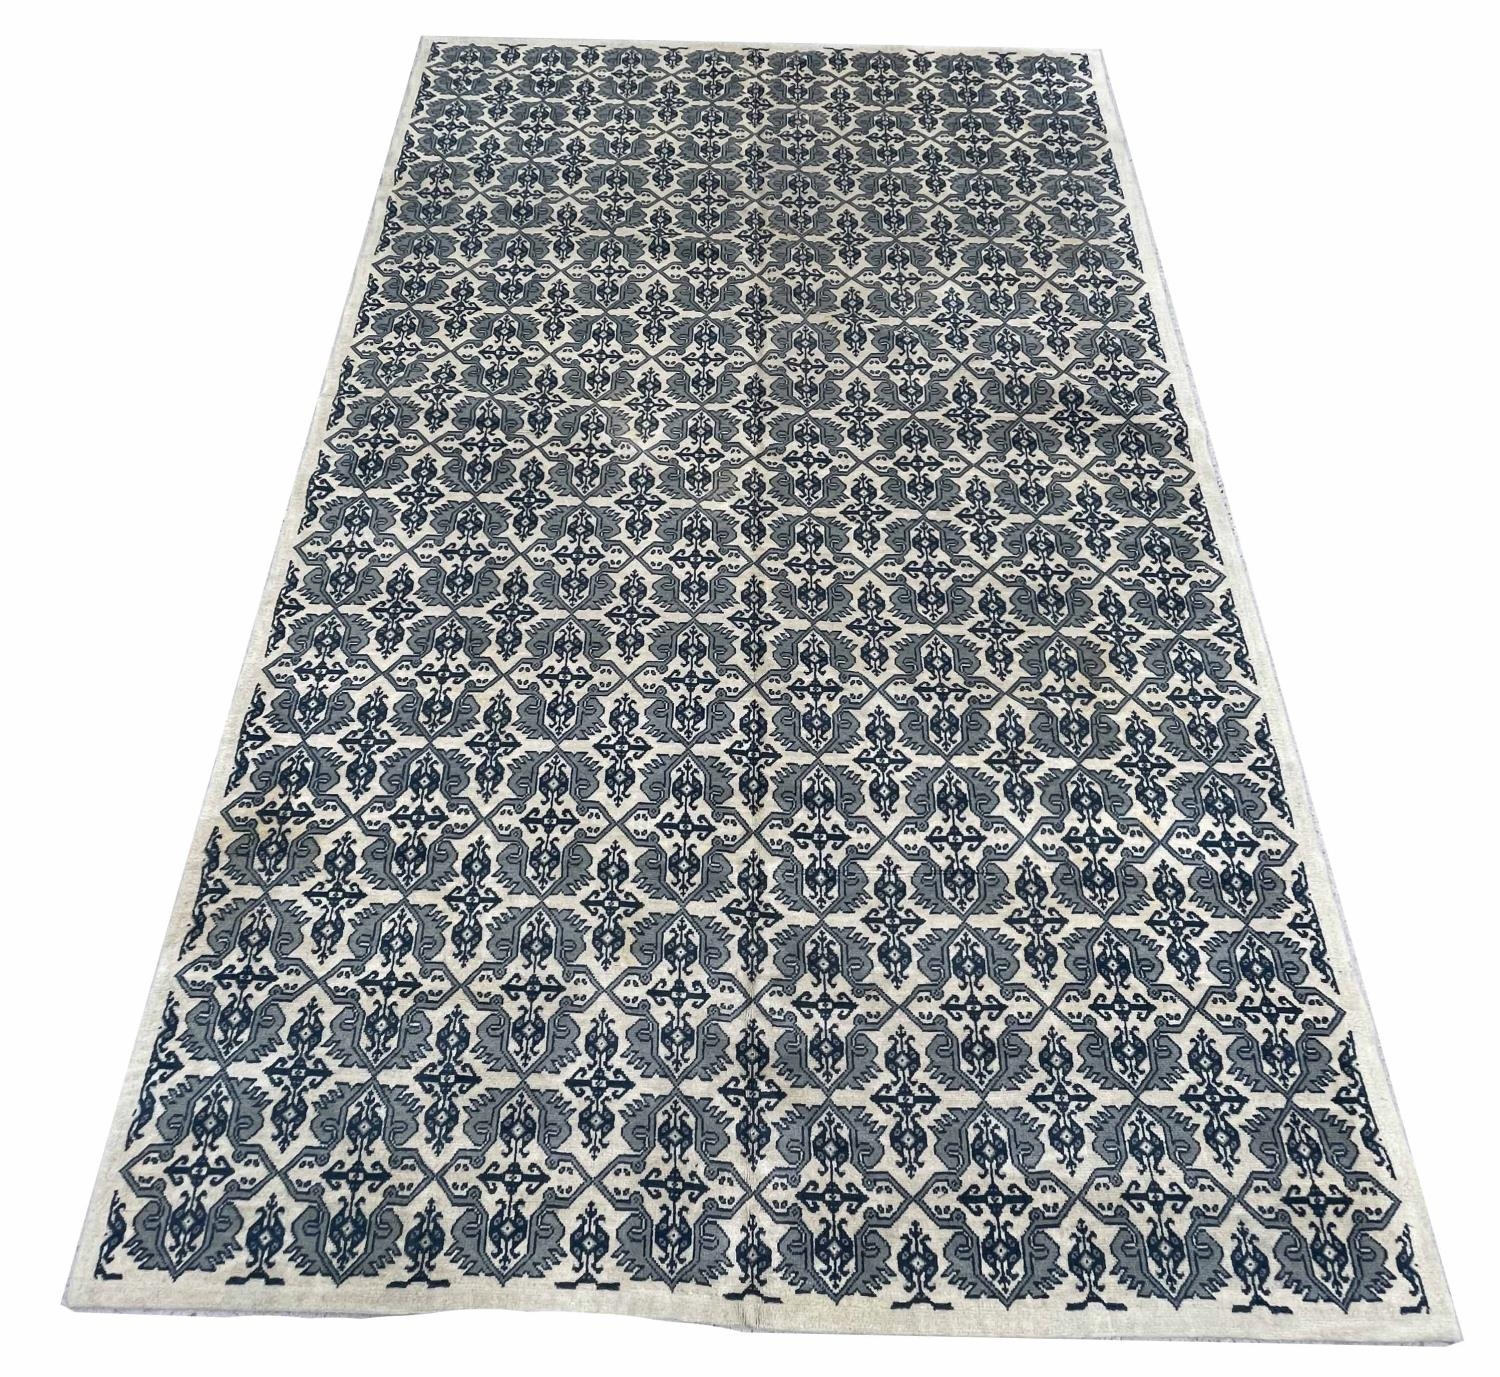 Spanish repeated geometric pattern carpet, 120" x 78" approx